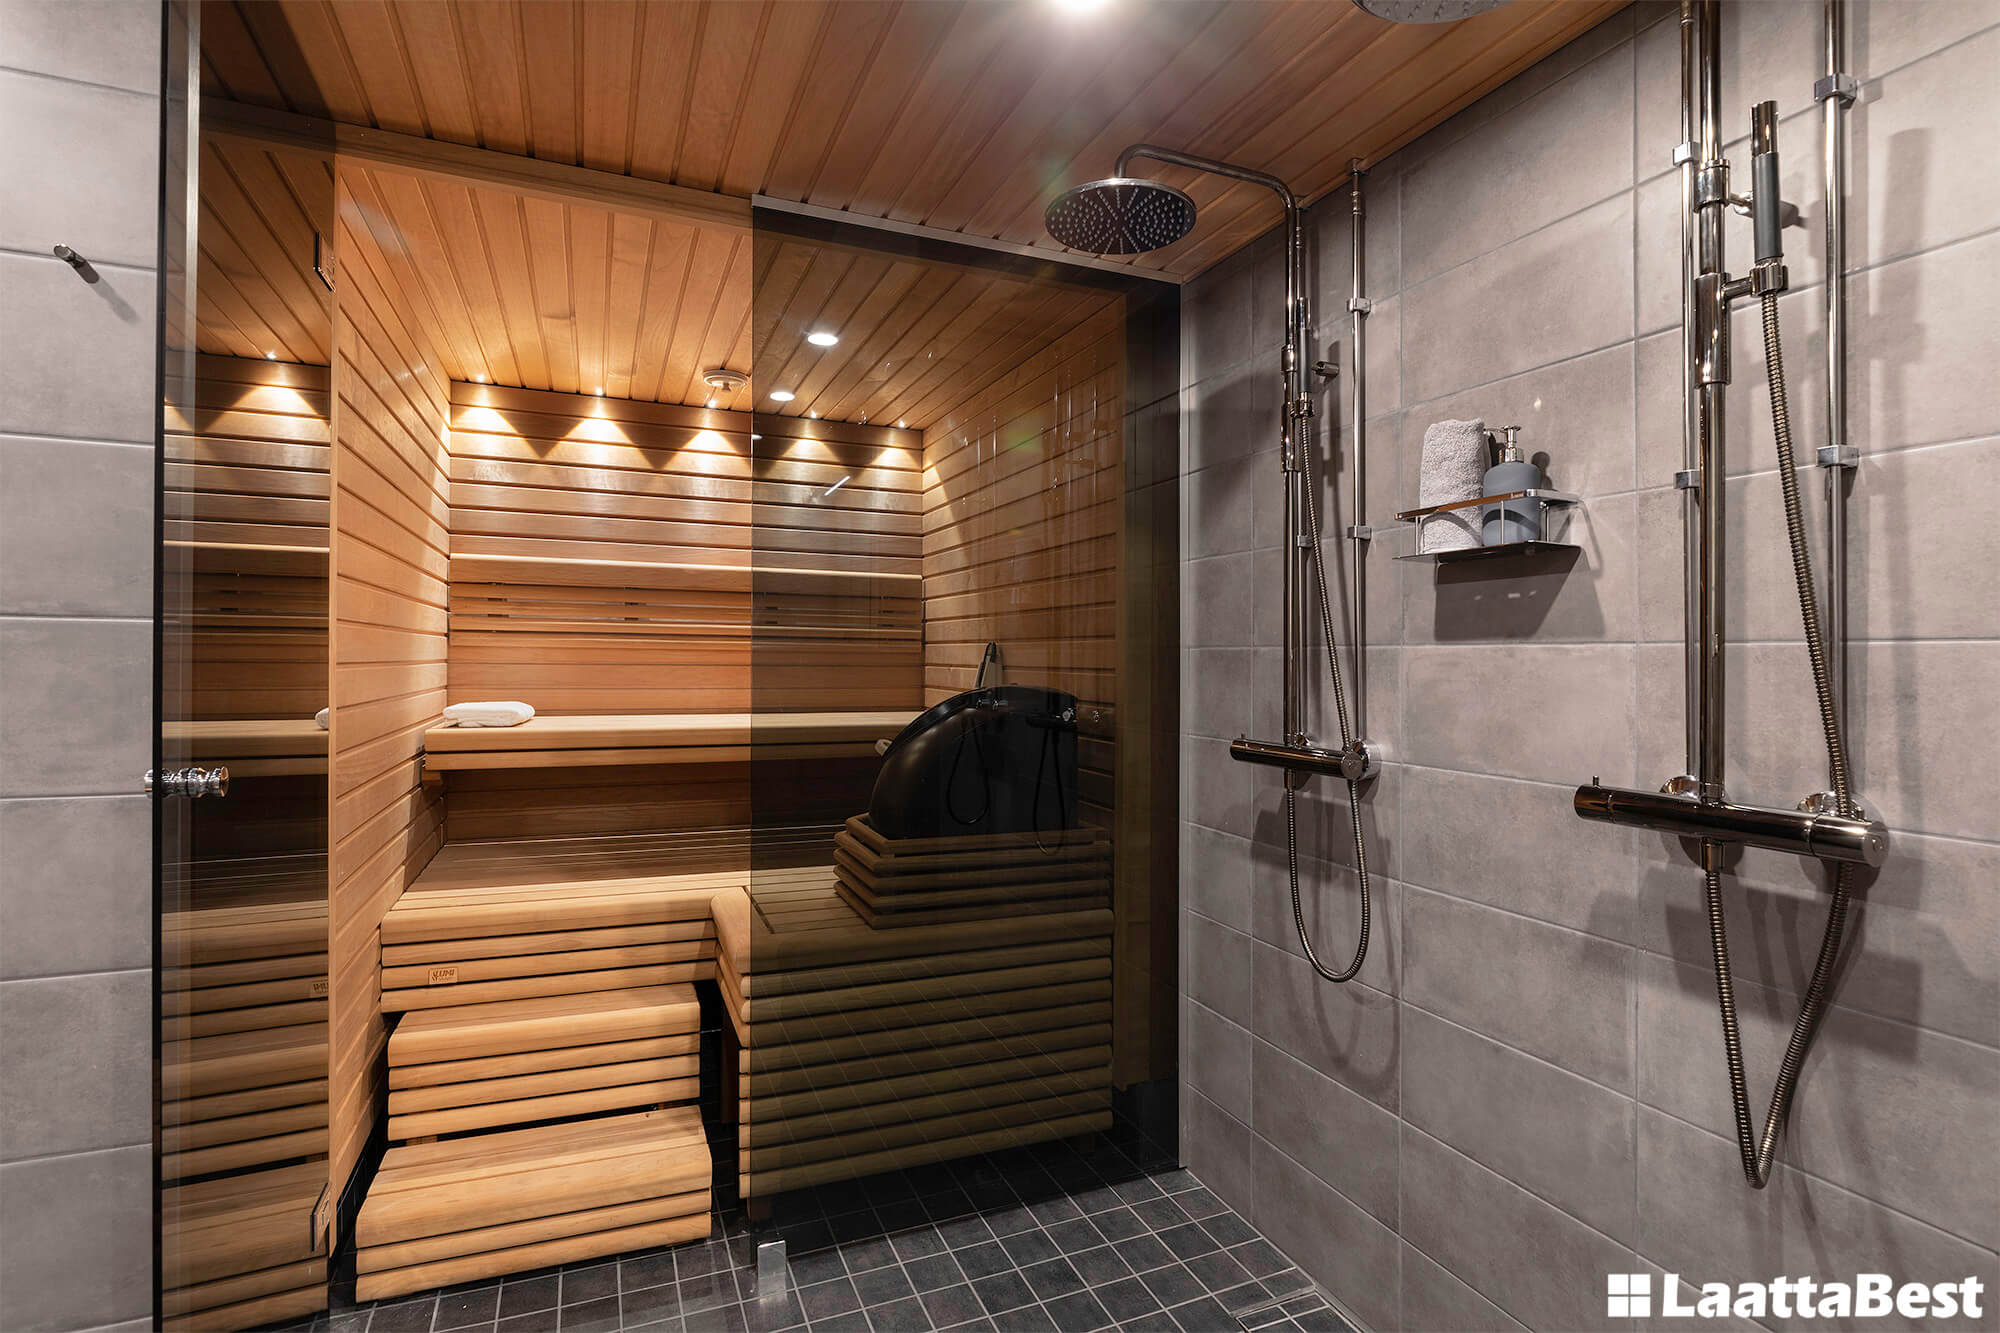 Kylpyhuone, sauna ja WC-tila - remontti | LaattaBest